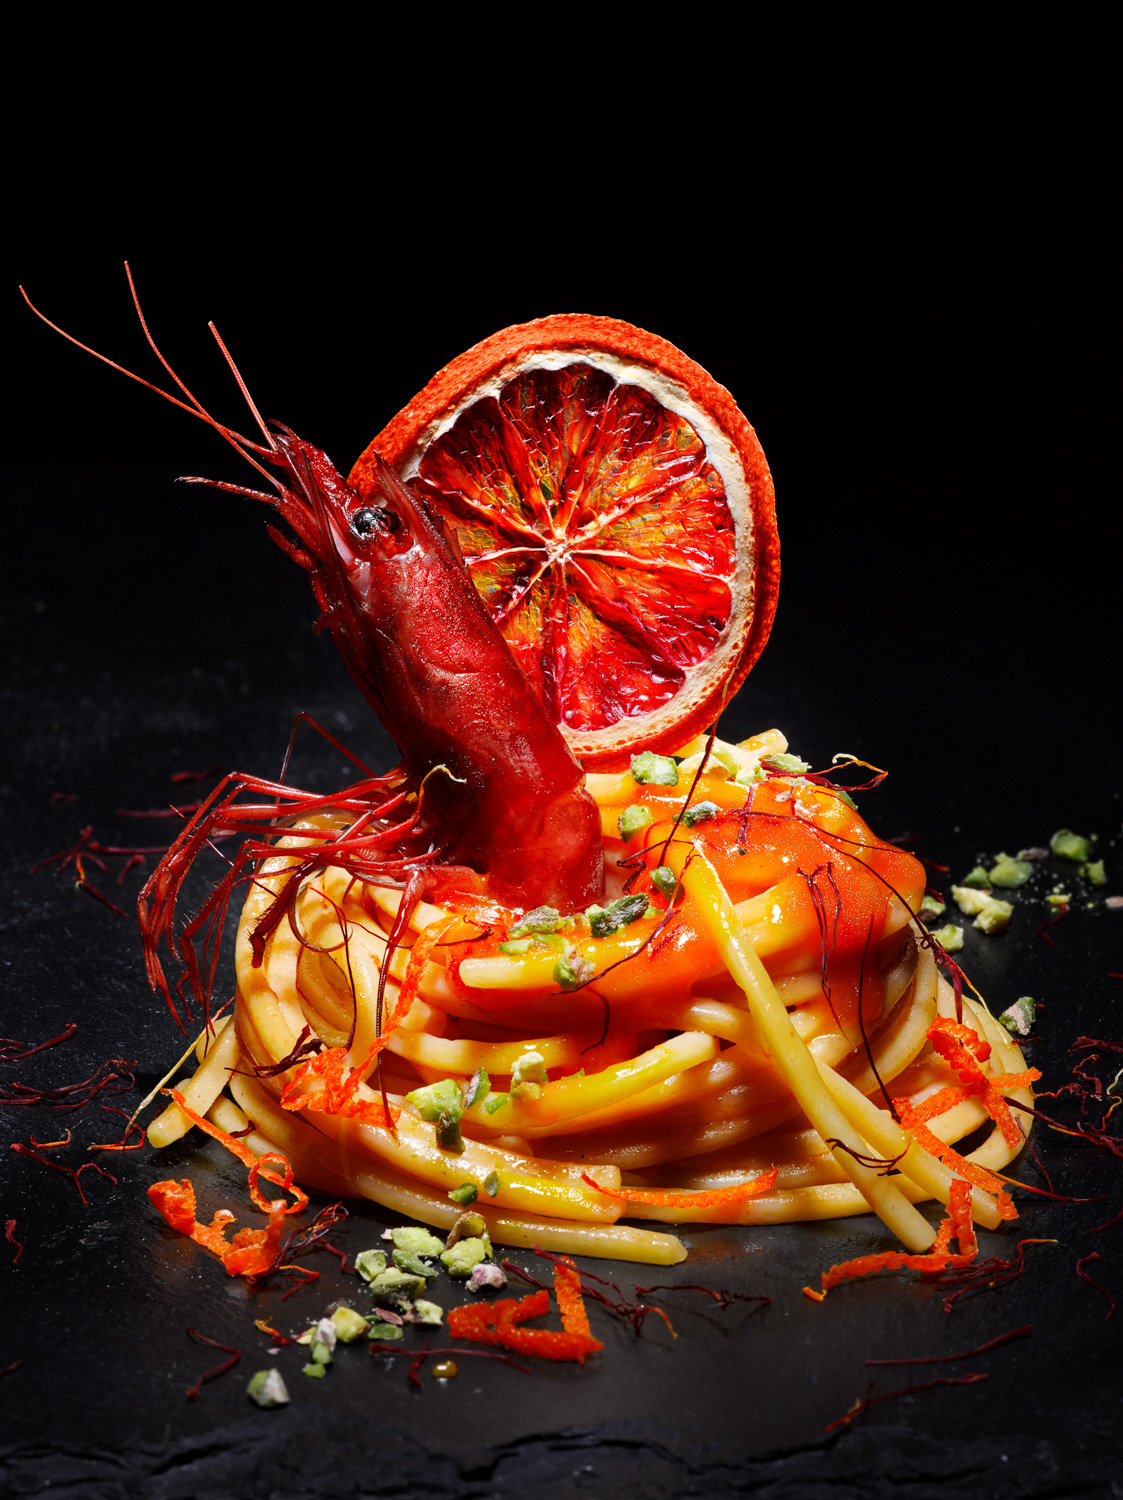  Project:  Fine art food prints Food Designer:  Bruno settimi